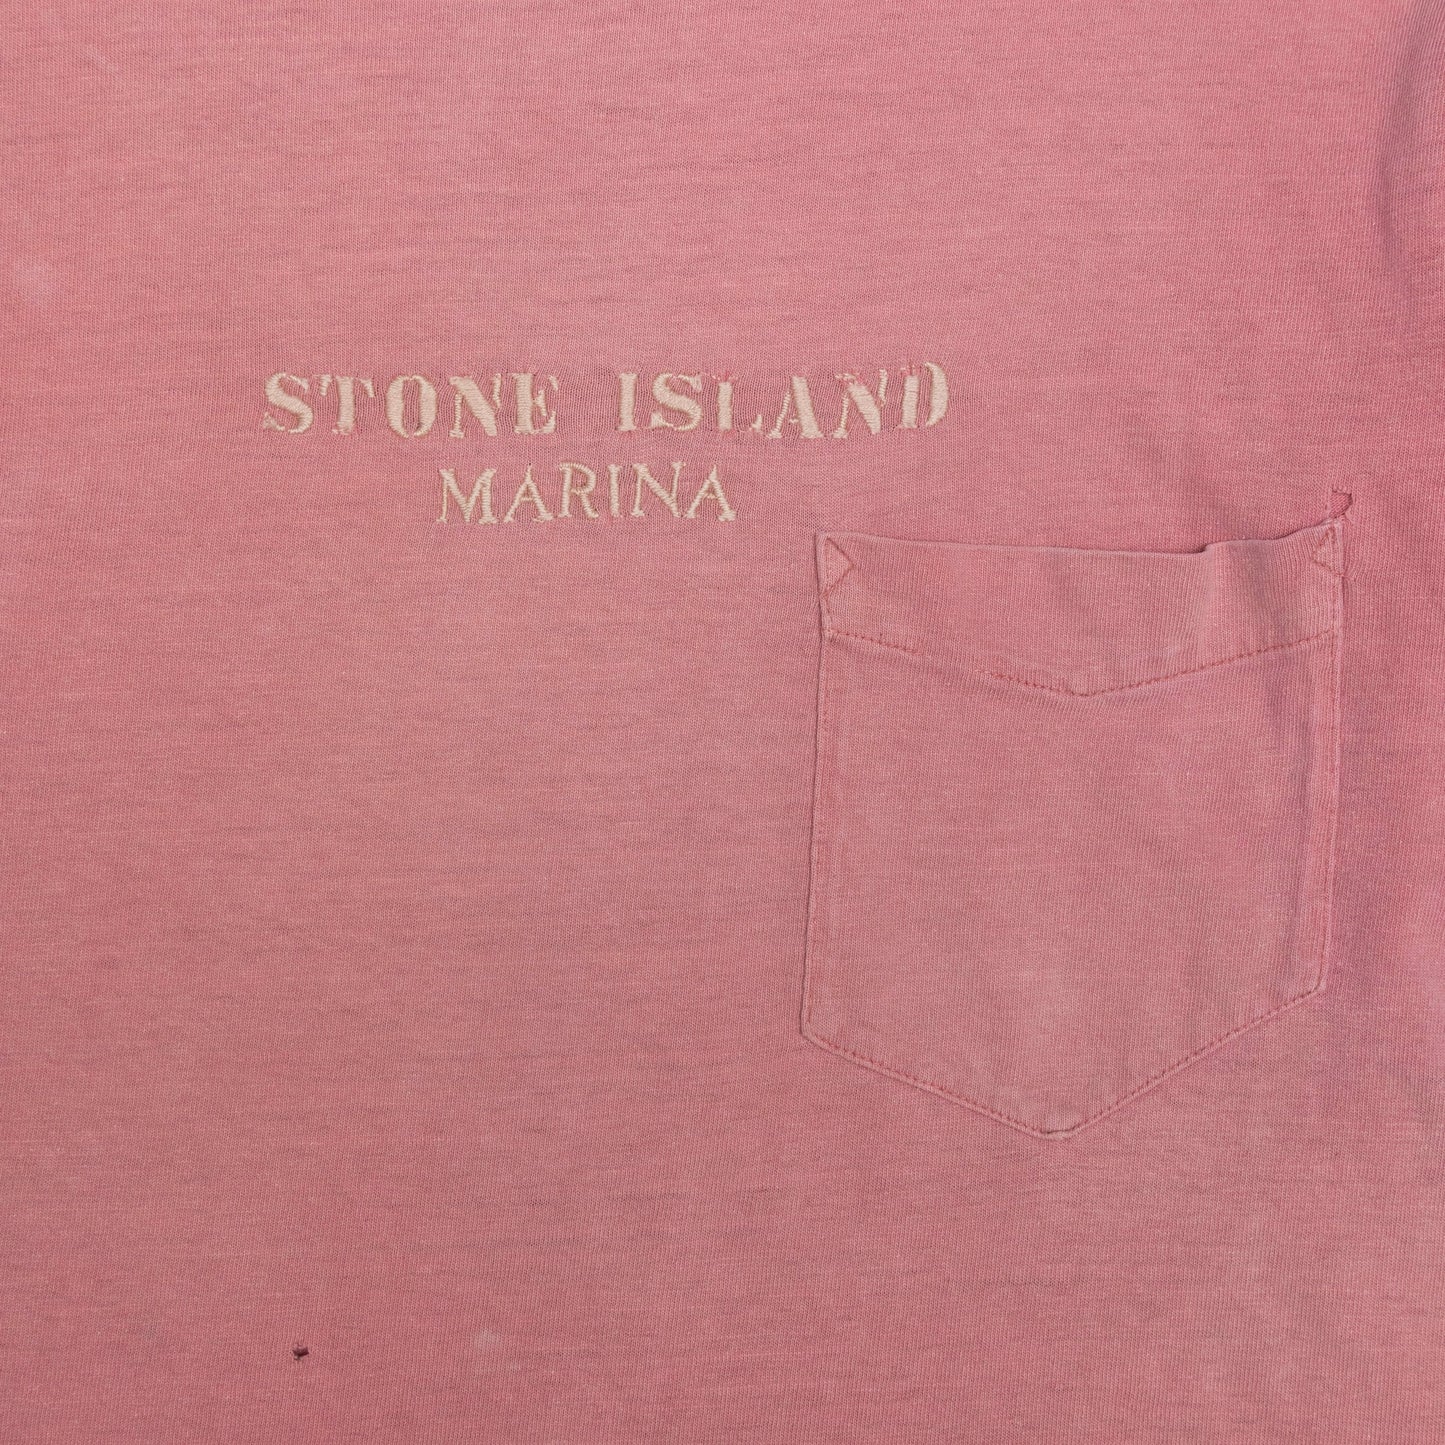 1980s Stone Island Marina Distressed Embroidered Logo Tee